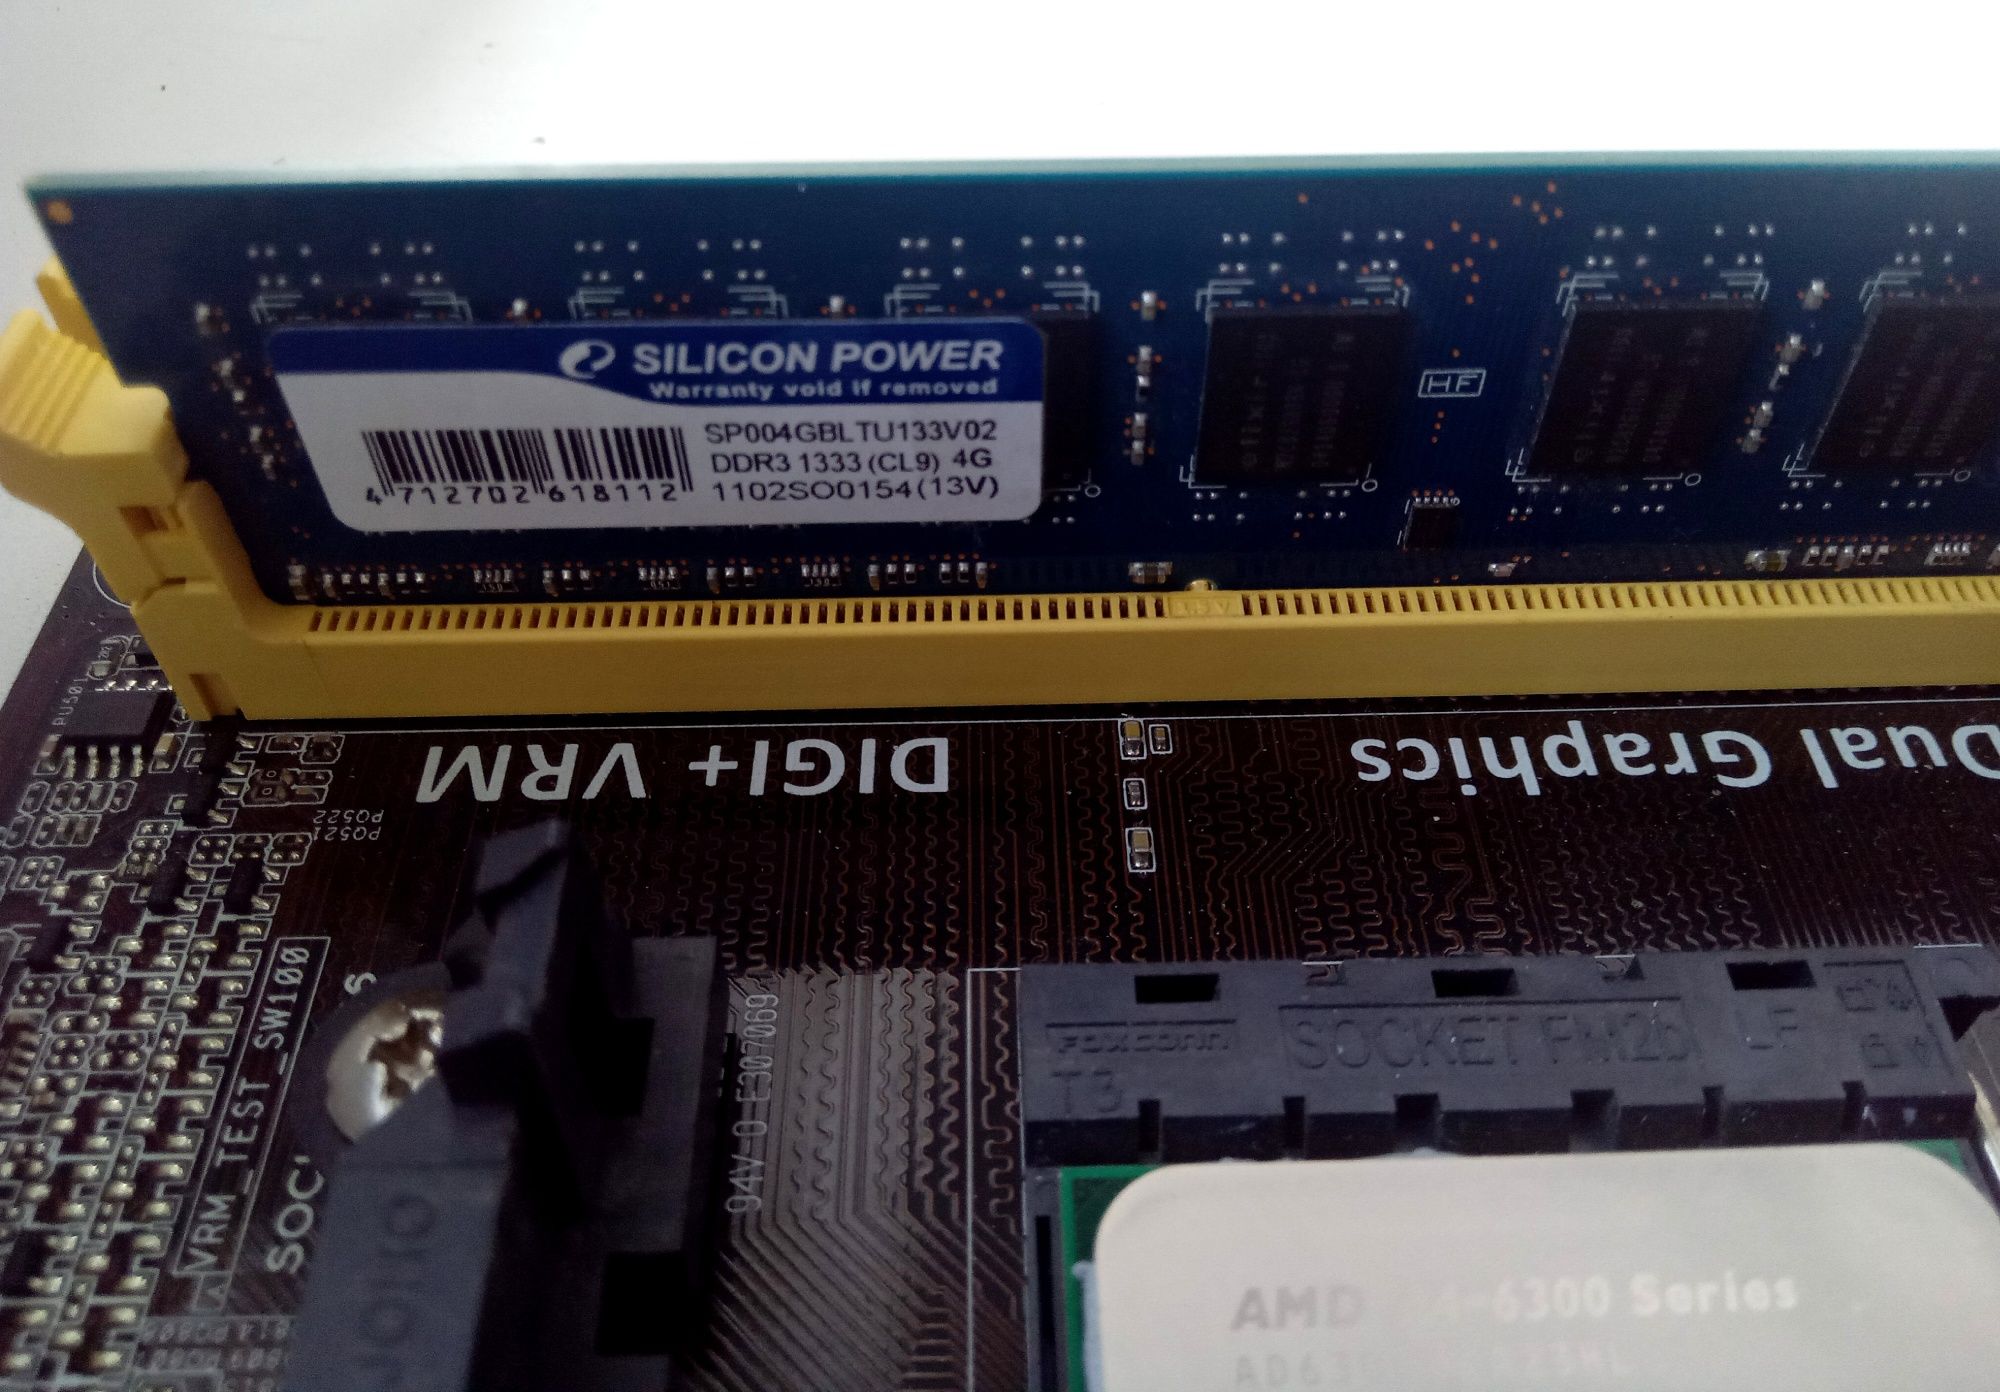 Продам комплект AMD FM2+ (м/п ASUS A58M-K , проц. A4-6300, DDR3 4Gb)